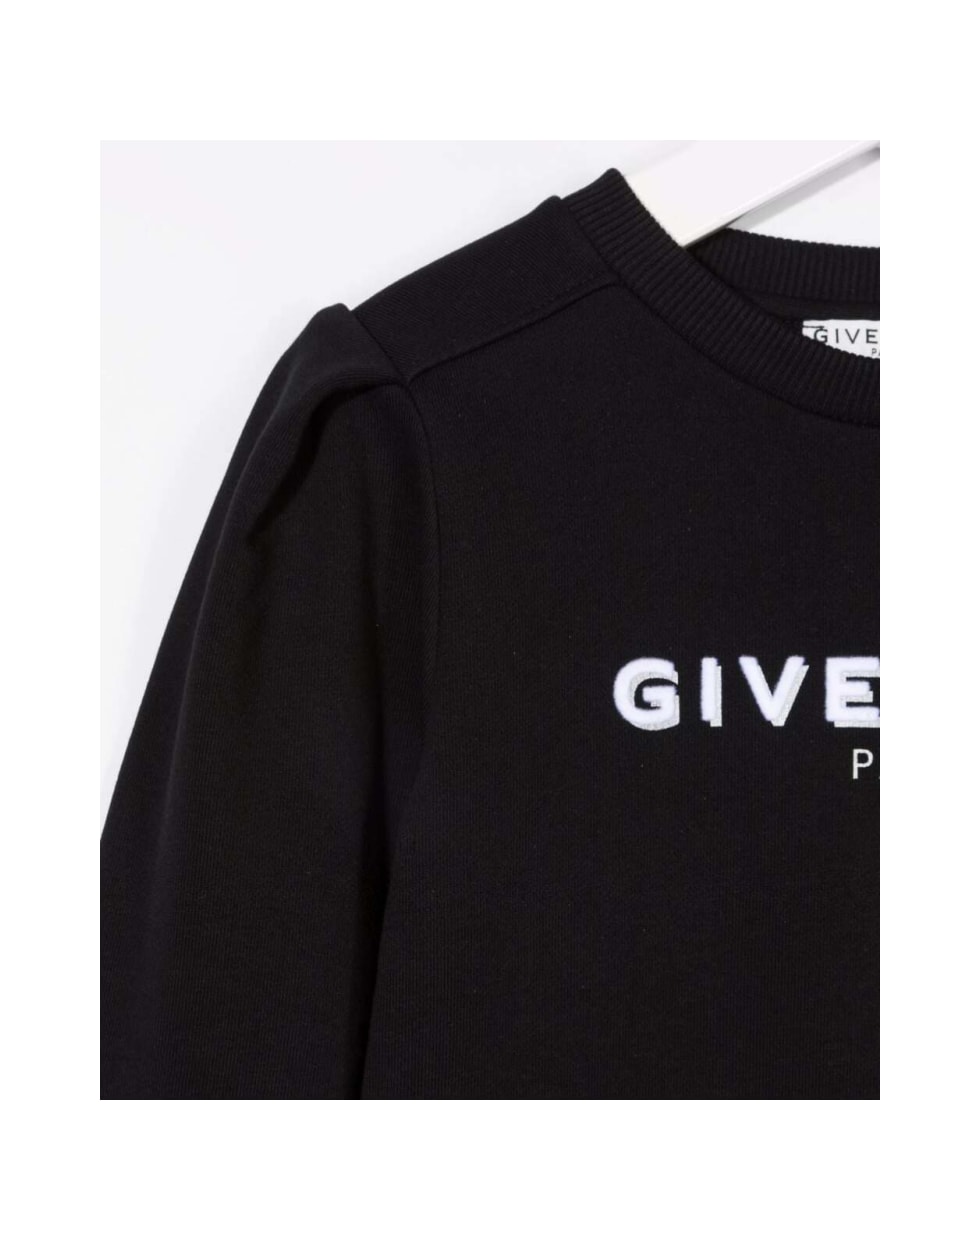 Givenchy Black Cotton Sweatshirt With Logo - Black